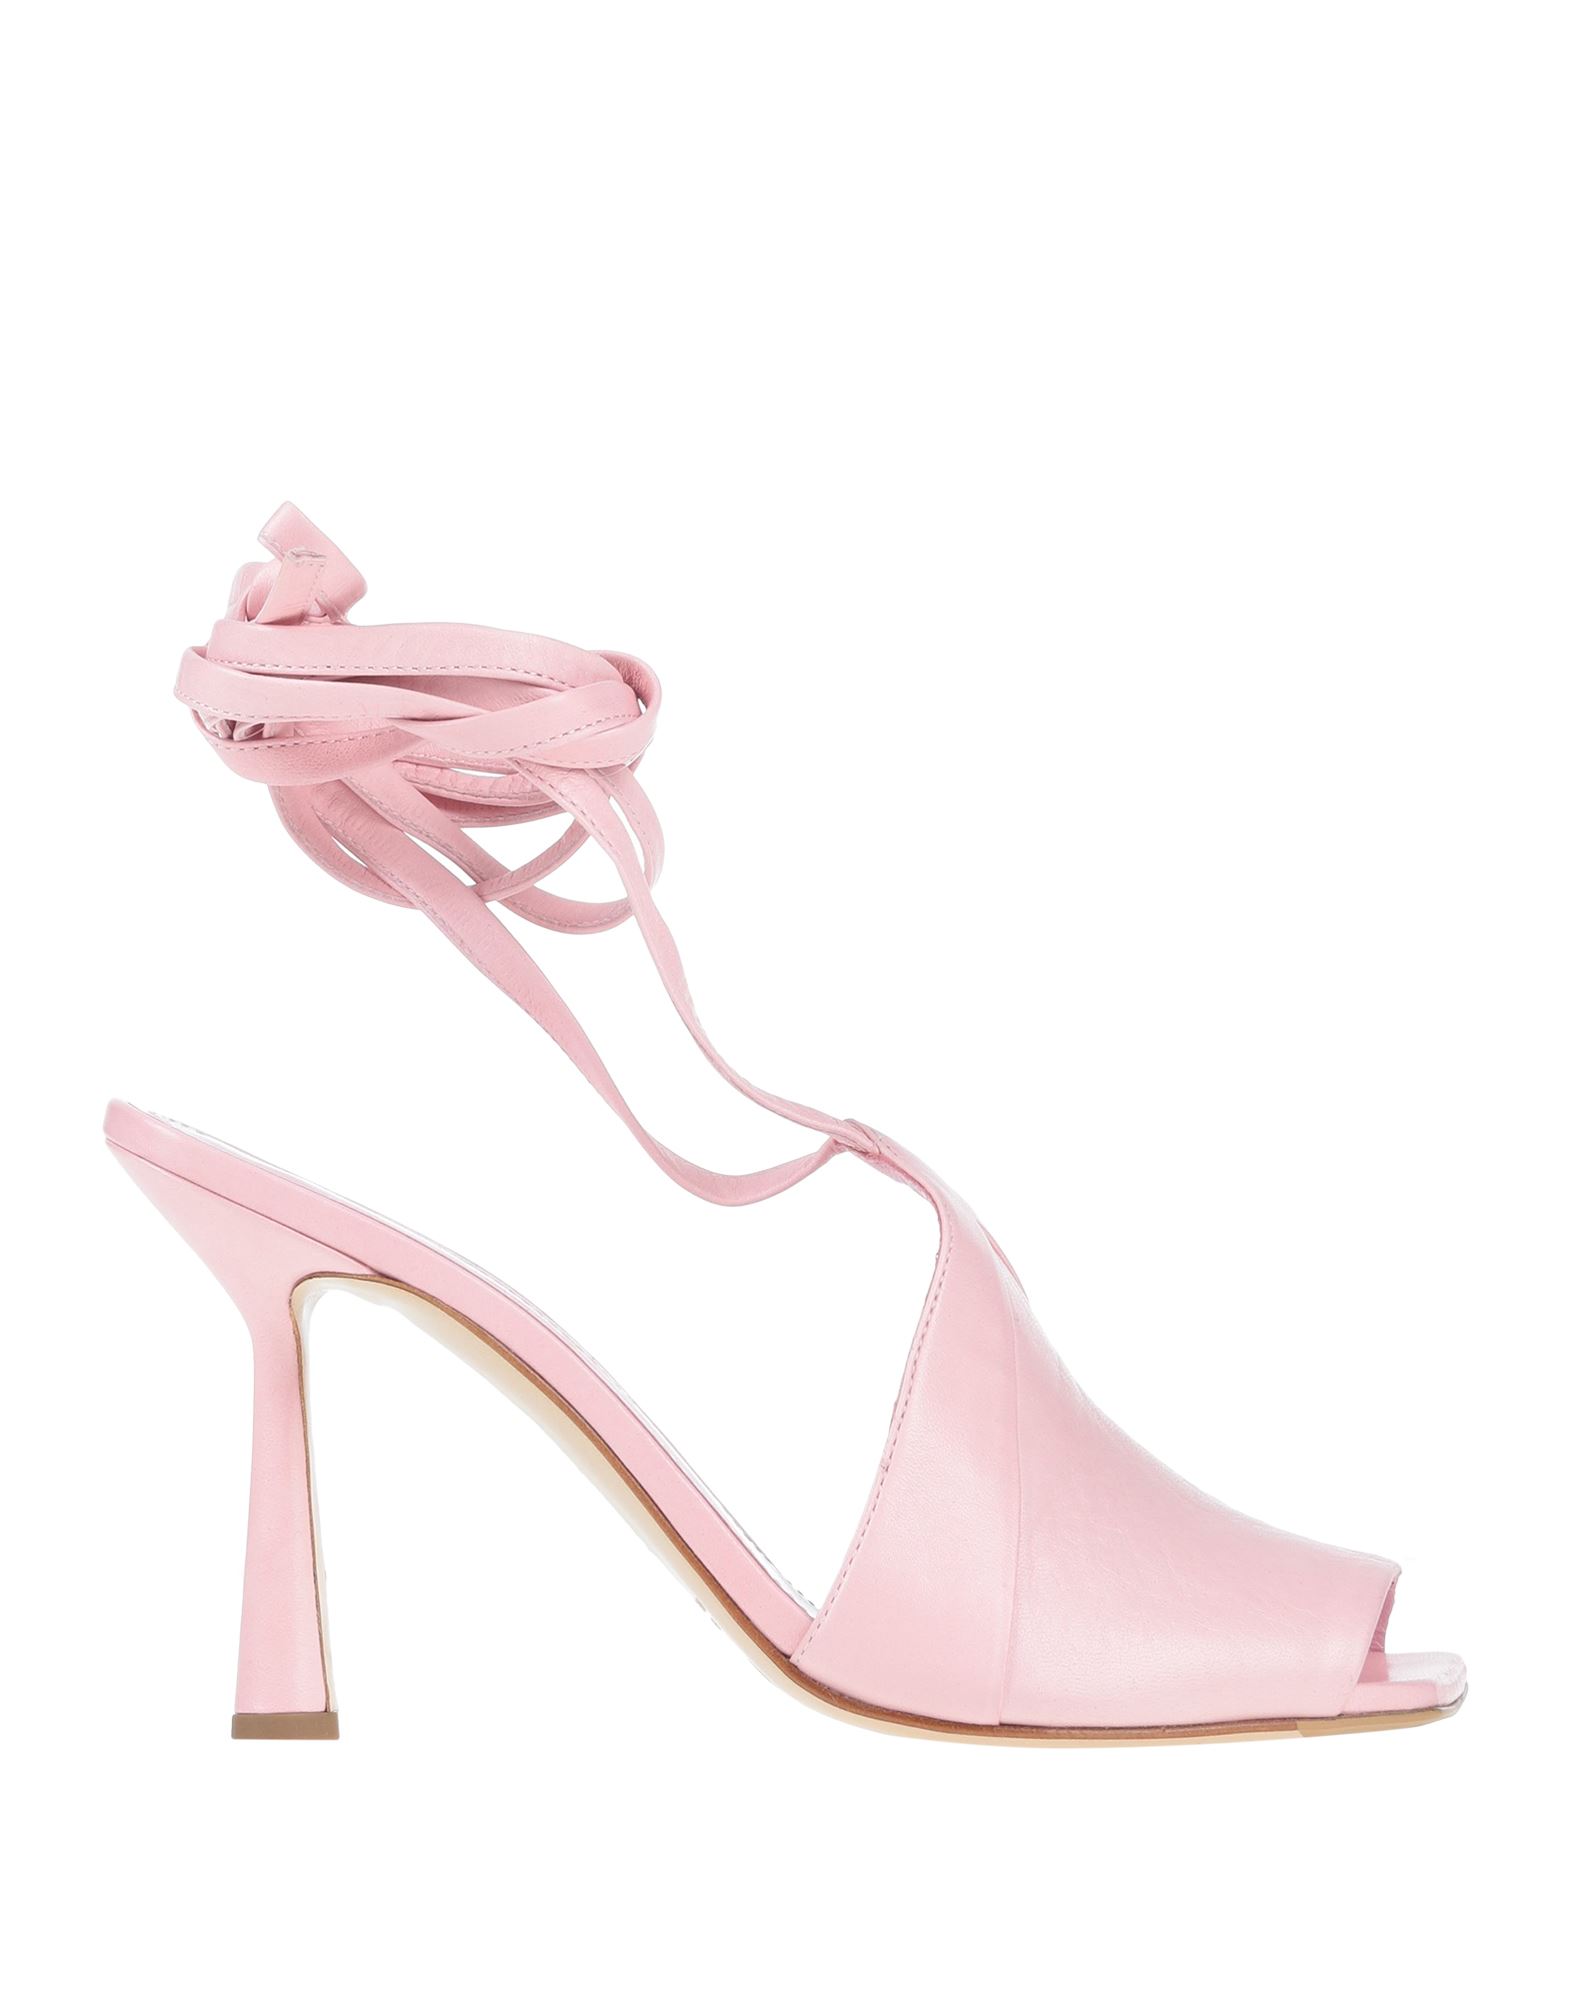 Aldo Castagna Sandals In Pink